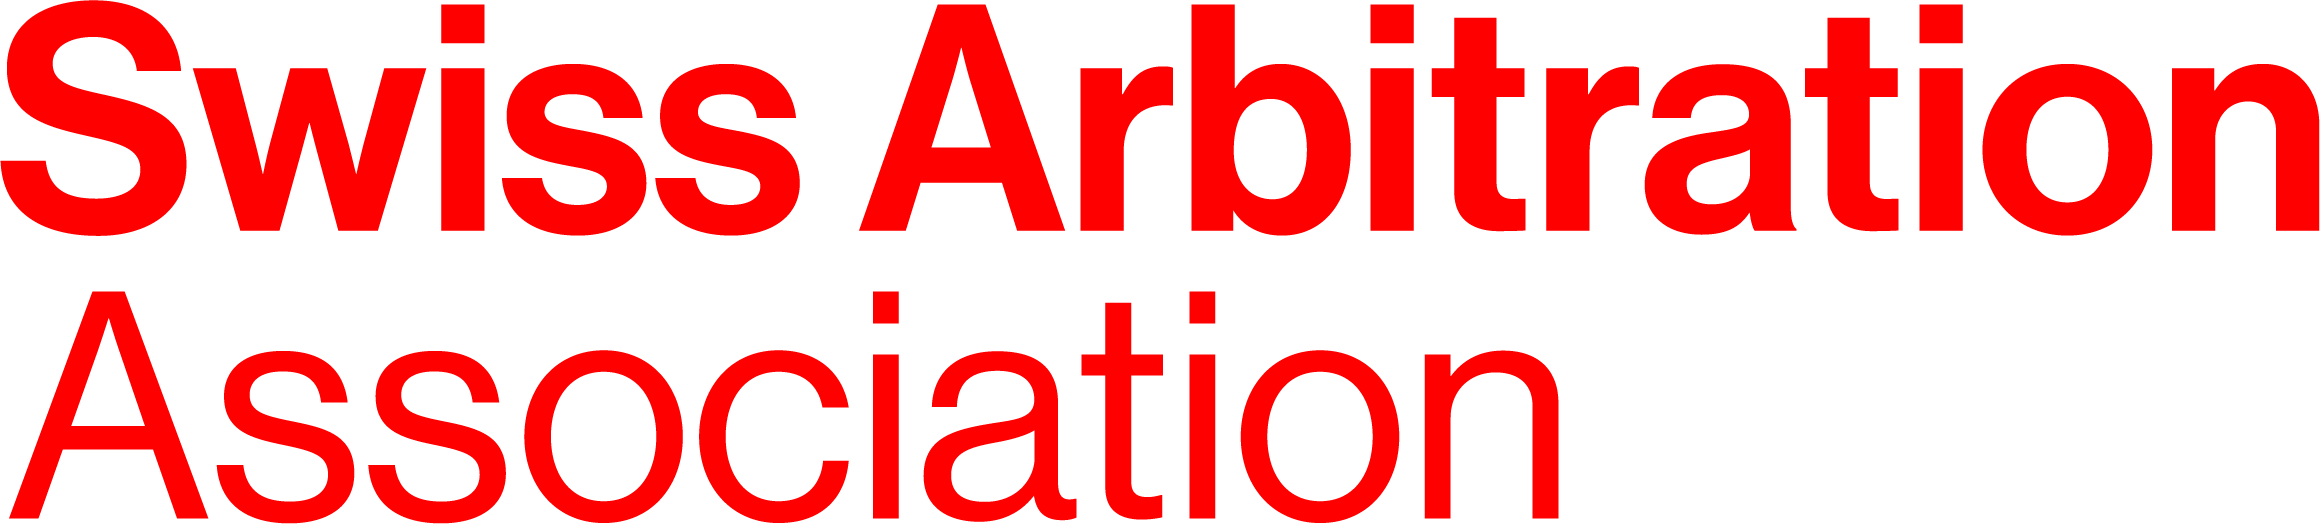 Swiss Arbitration Association